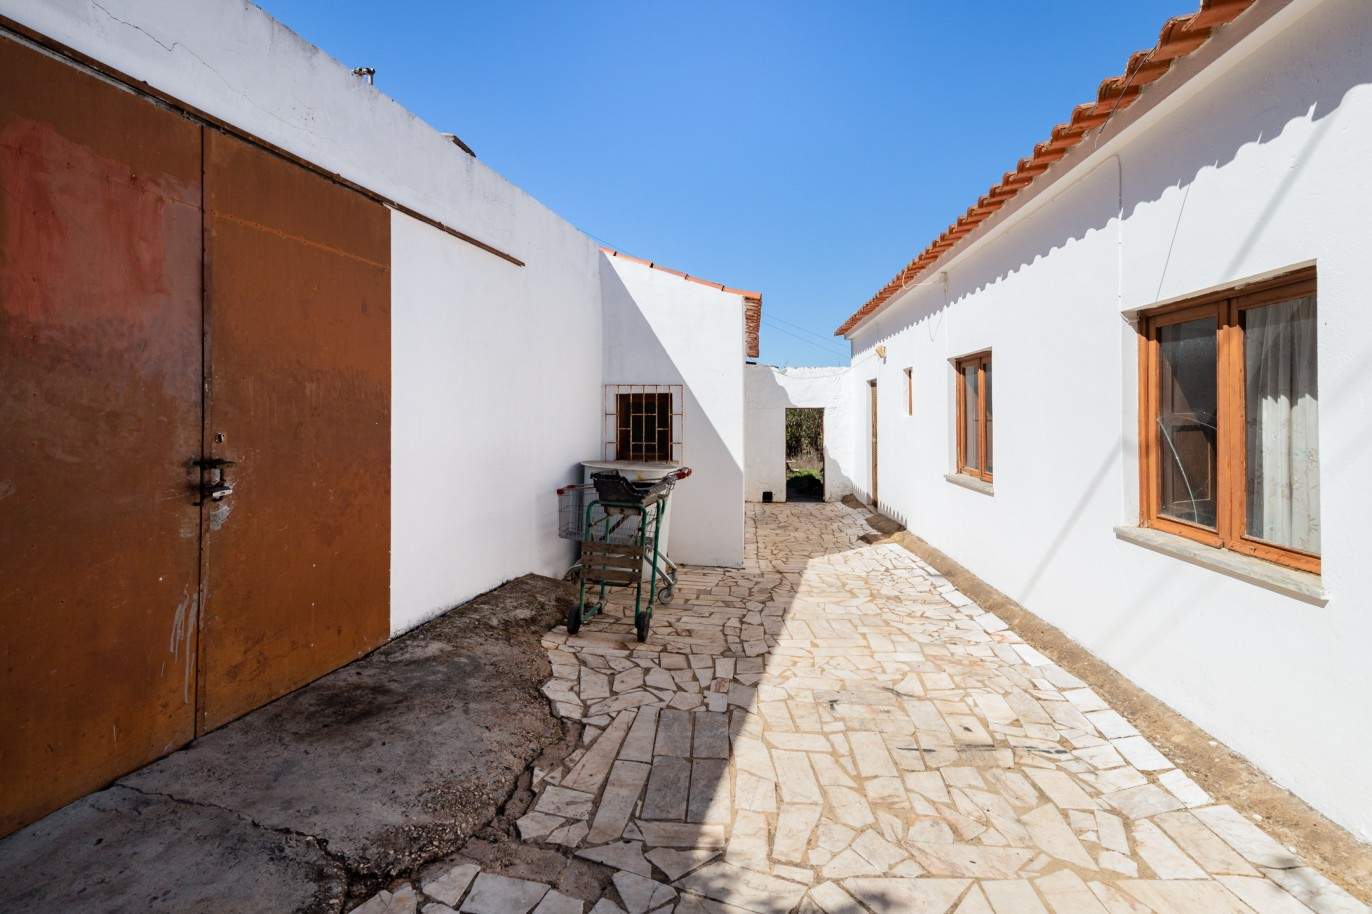 Property to remodel, for sale in Falfeira, Lagos, Algarve_210388